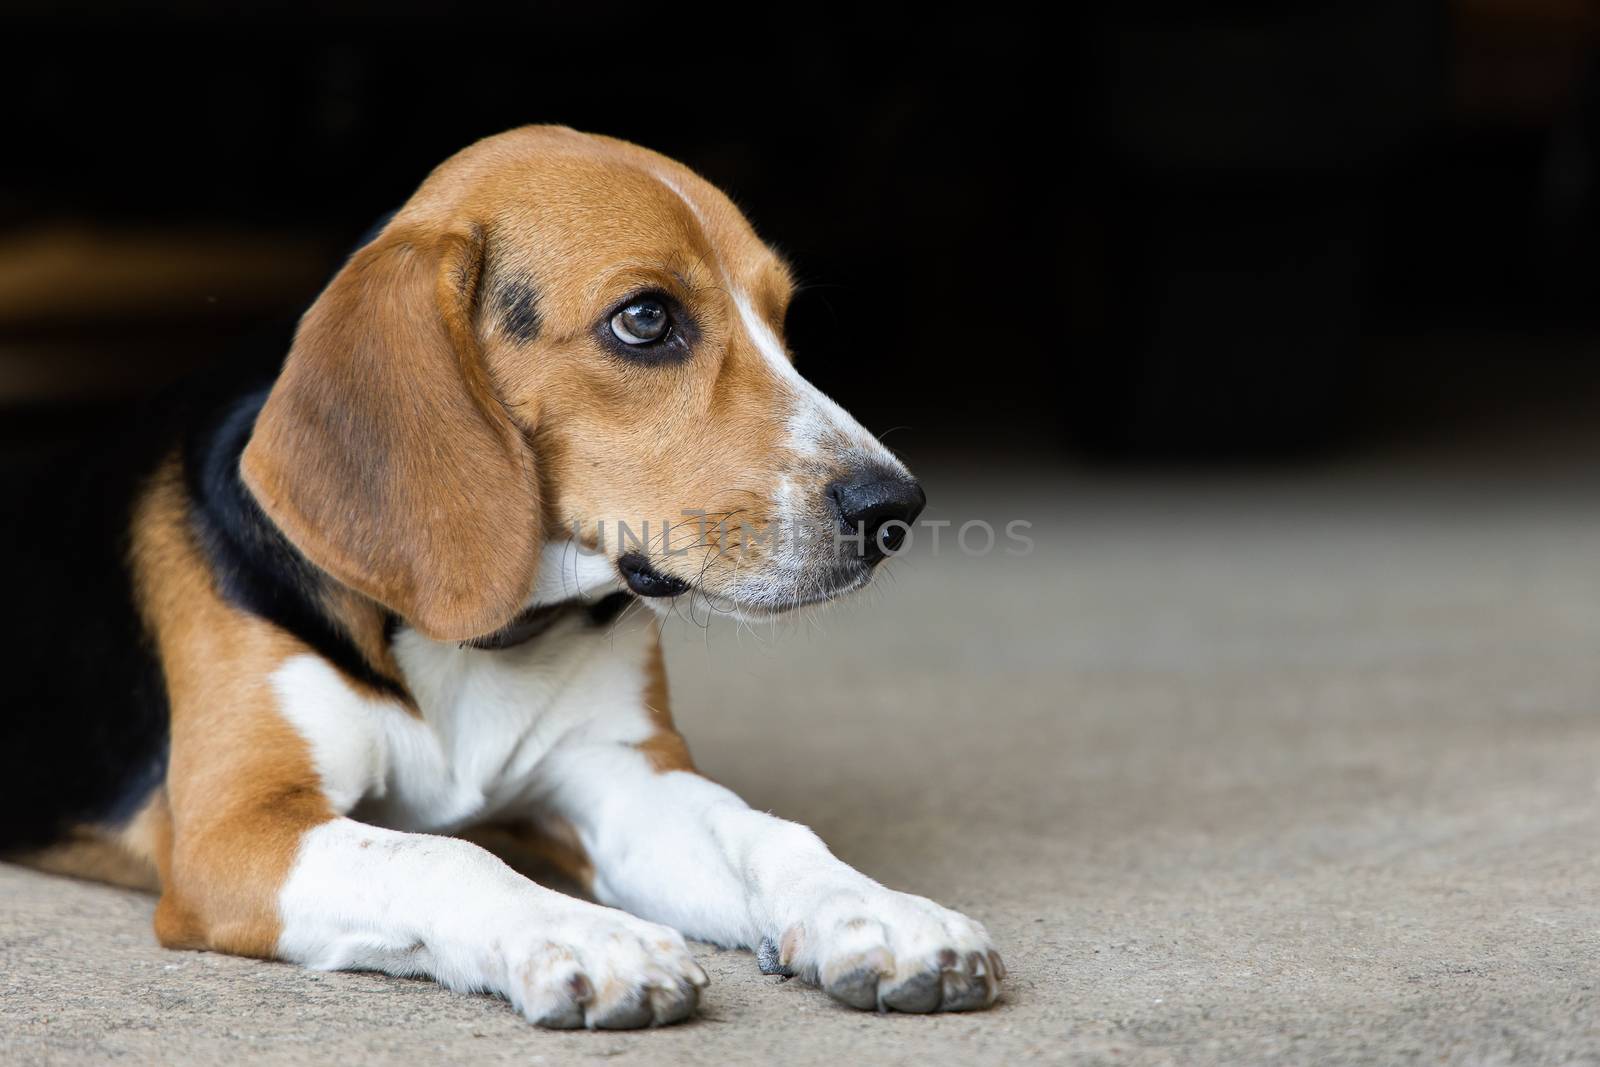 Puppy dog ripping ball apart Beagle dog purebred by freedomnaruk